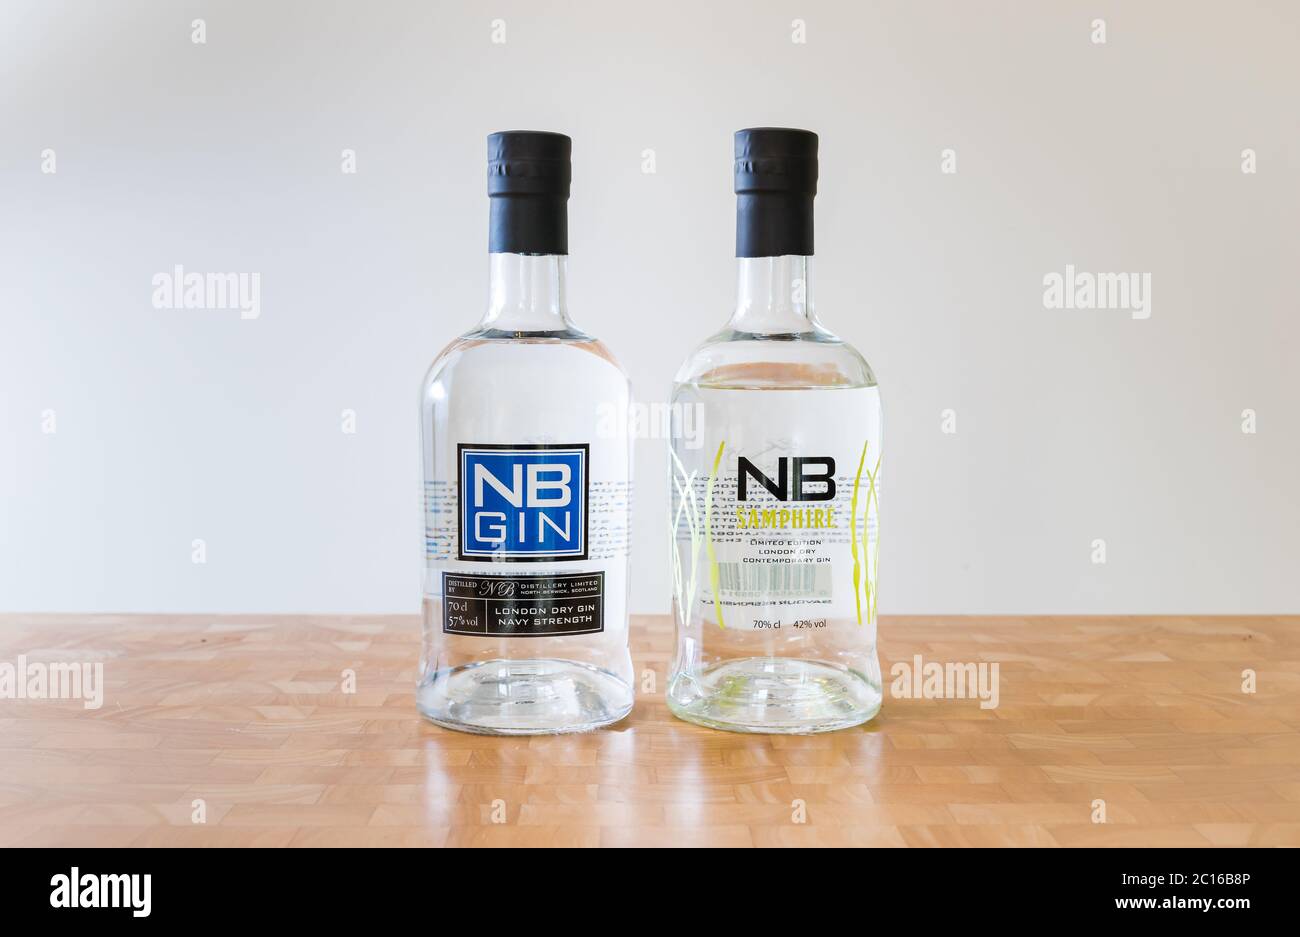 Bouteilles de marque North Berwick ou NB gin: Gin NB marine et gin NB samhire Banque D'Images